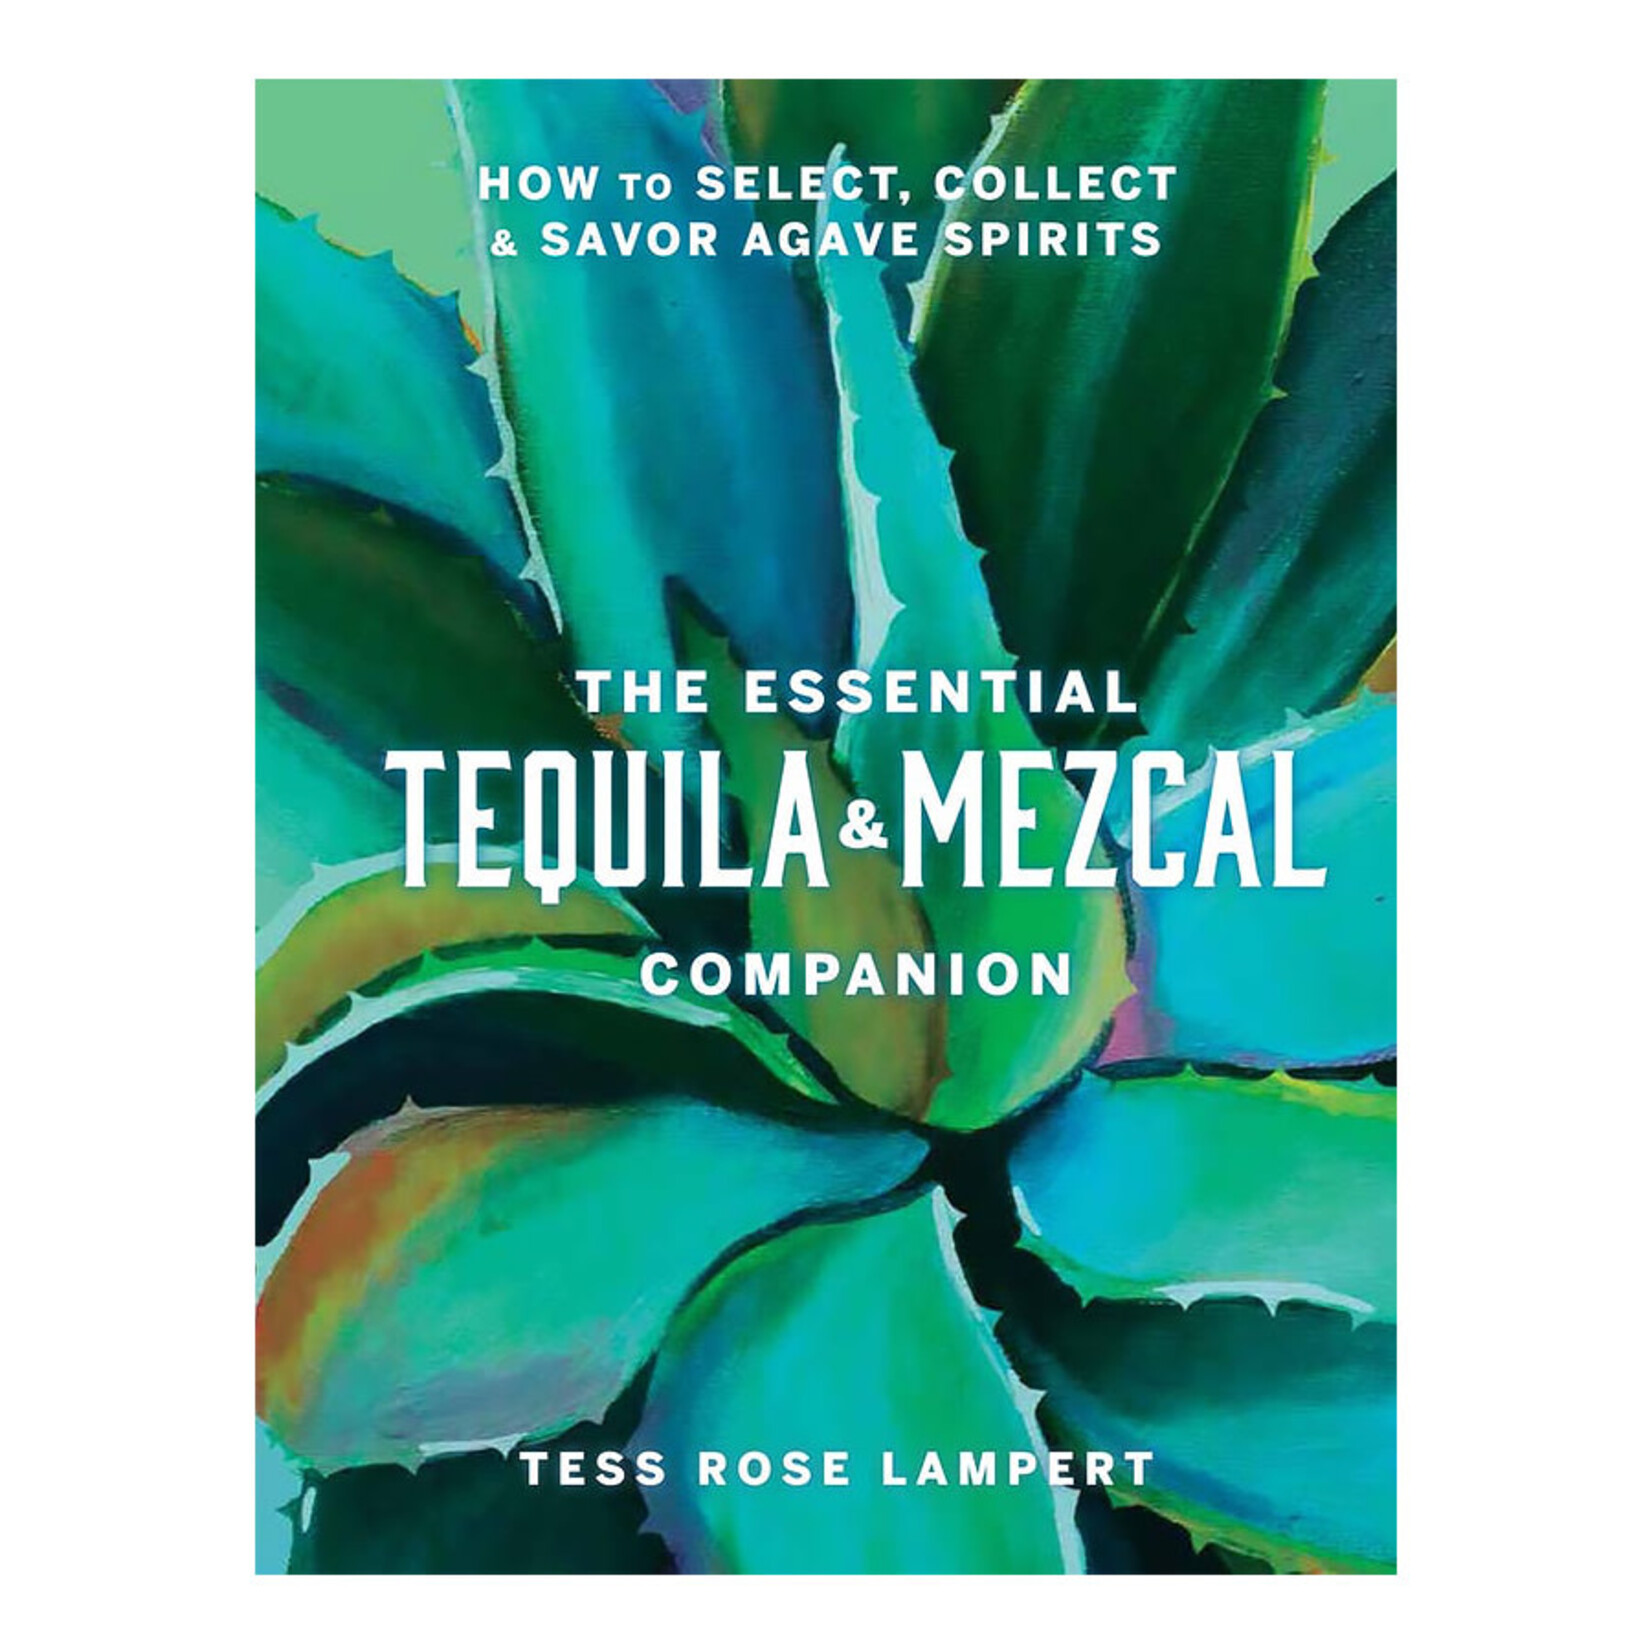 Union Square & Co. The Essential Tequila & Mezcal Companion